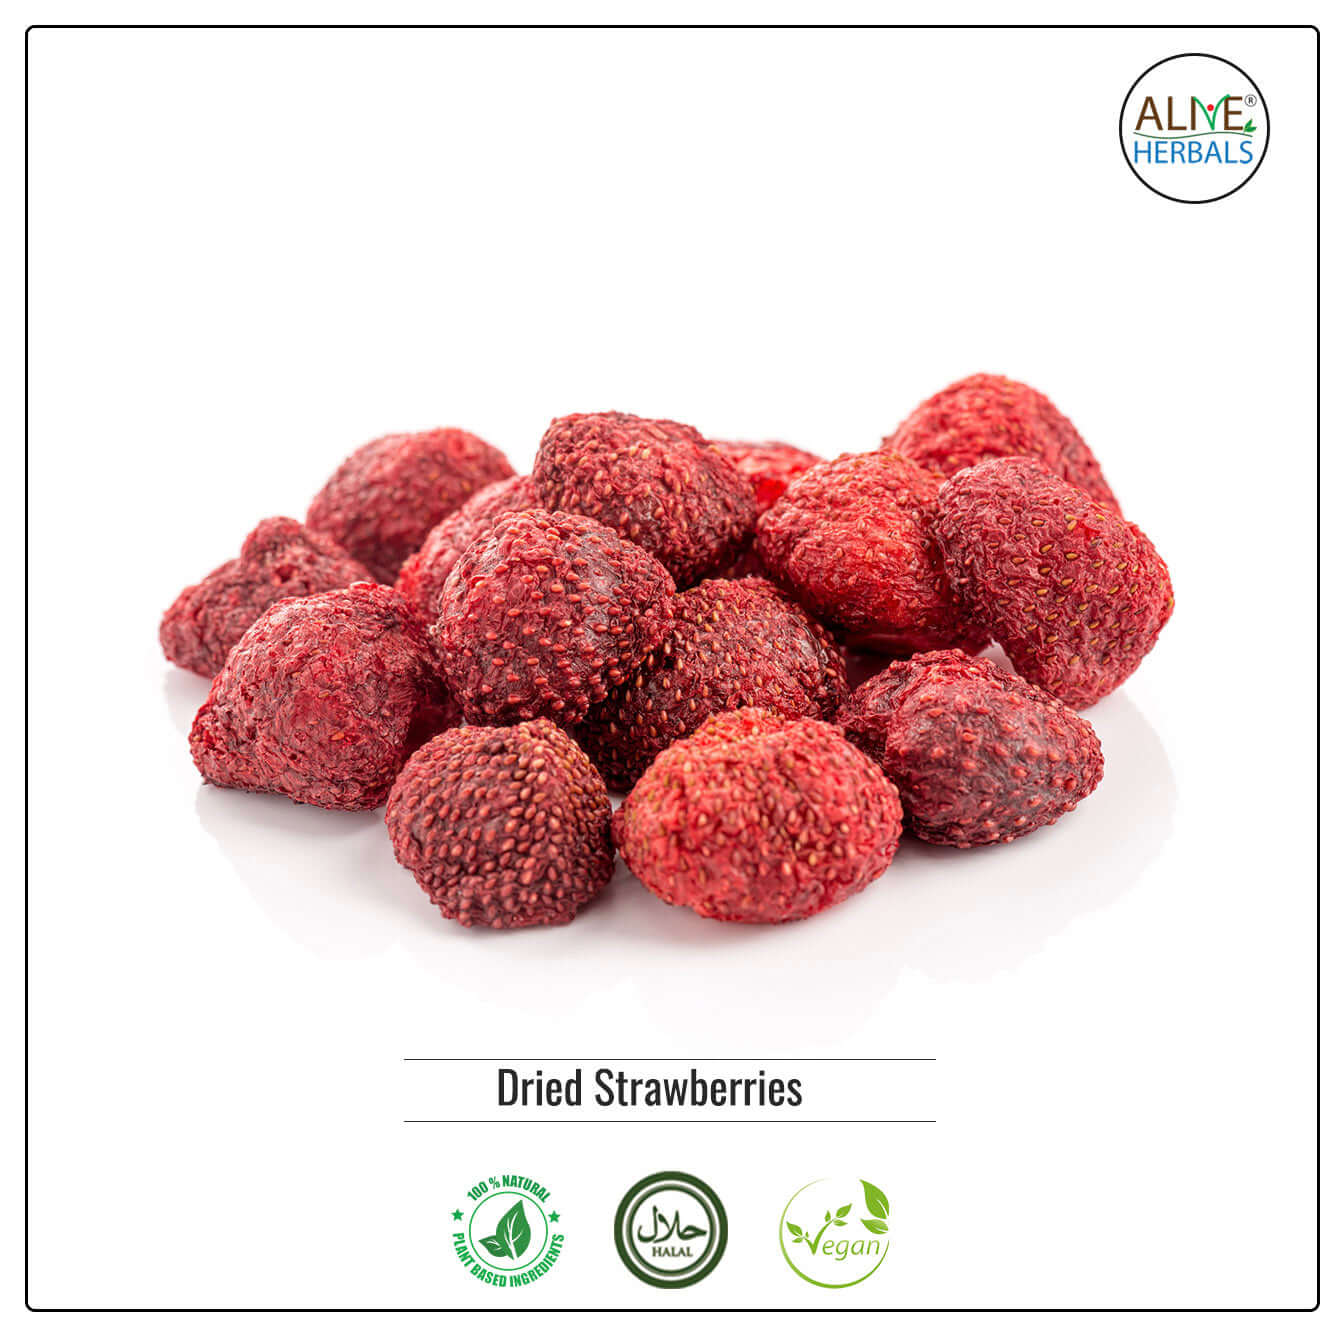 Dried strawberries - Buy at Natural Food Store | Alive Herbals.